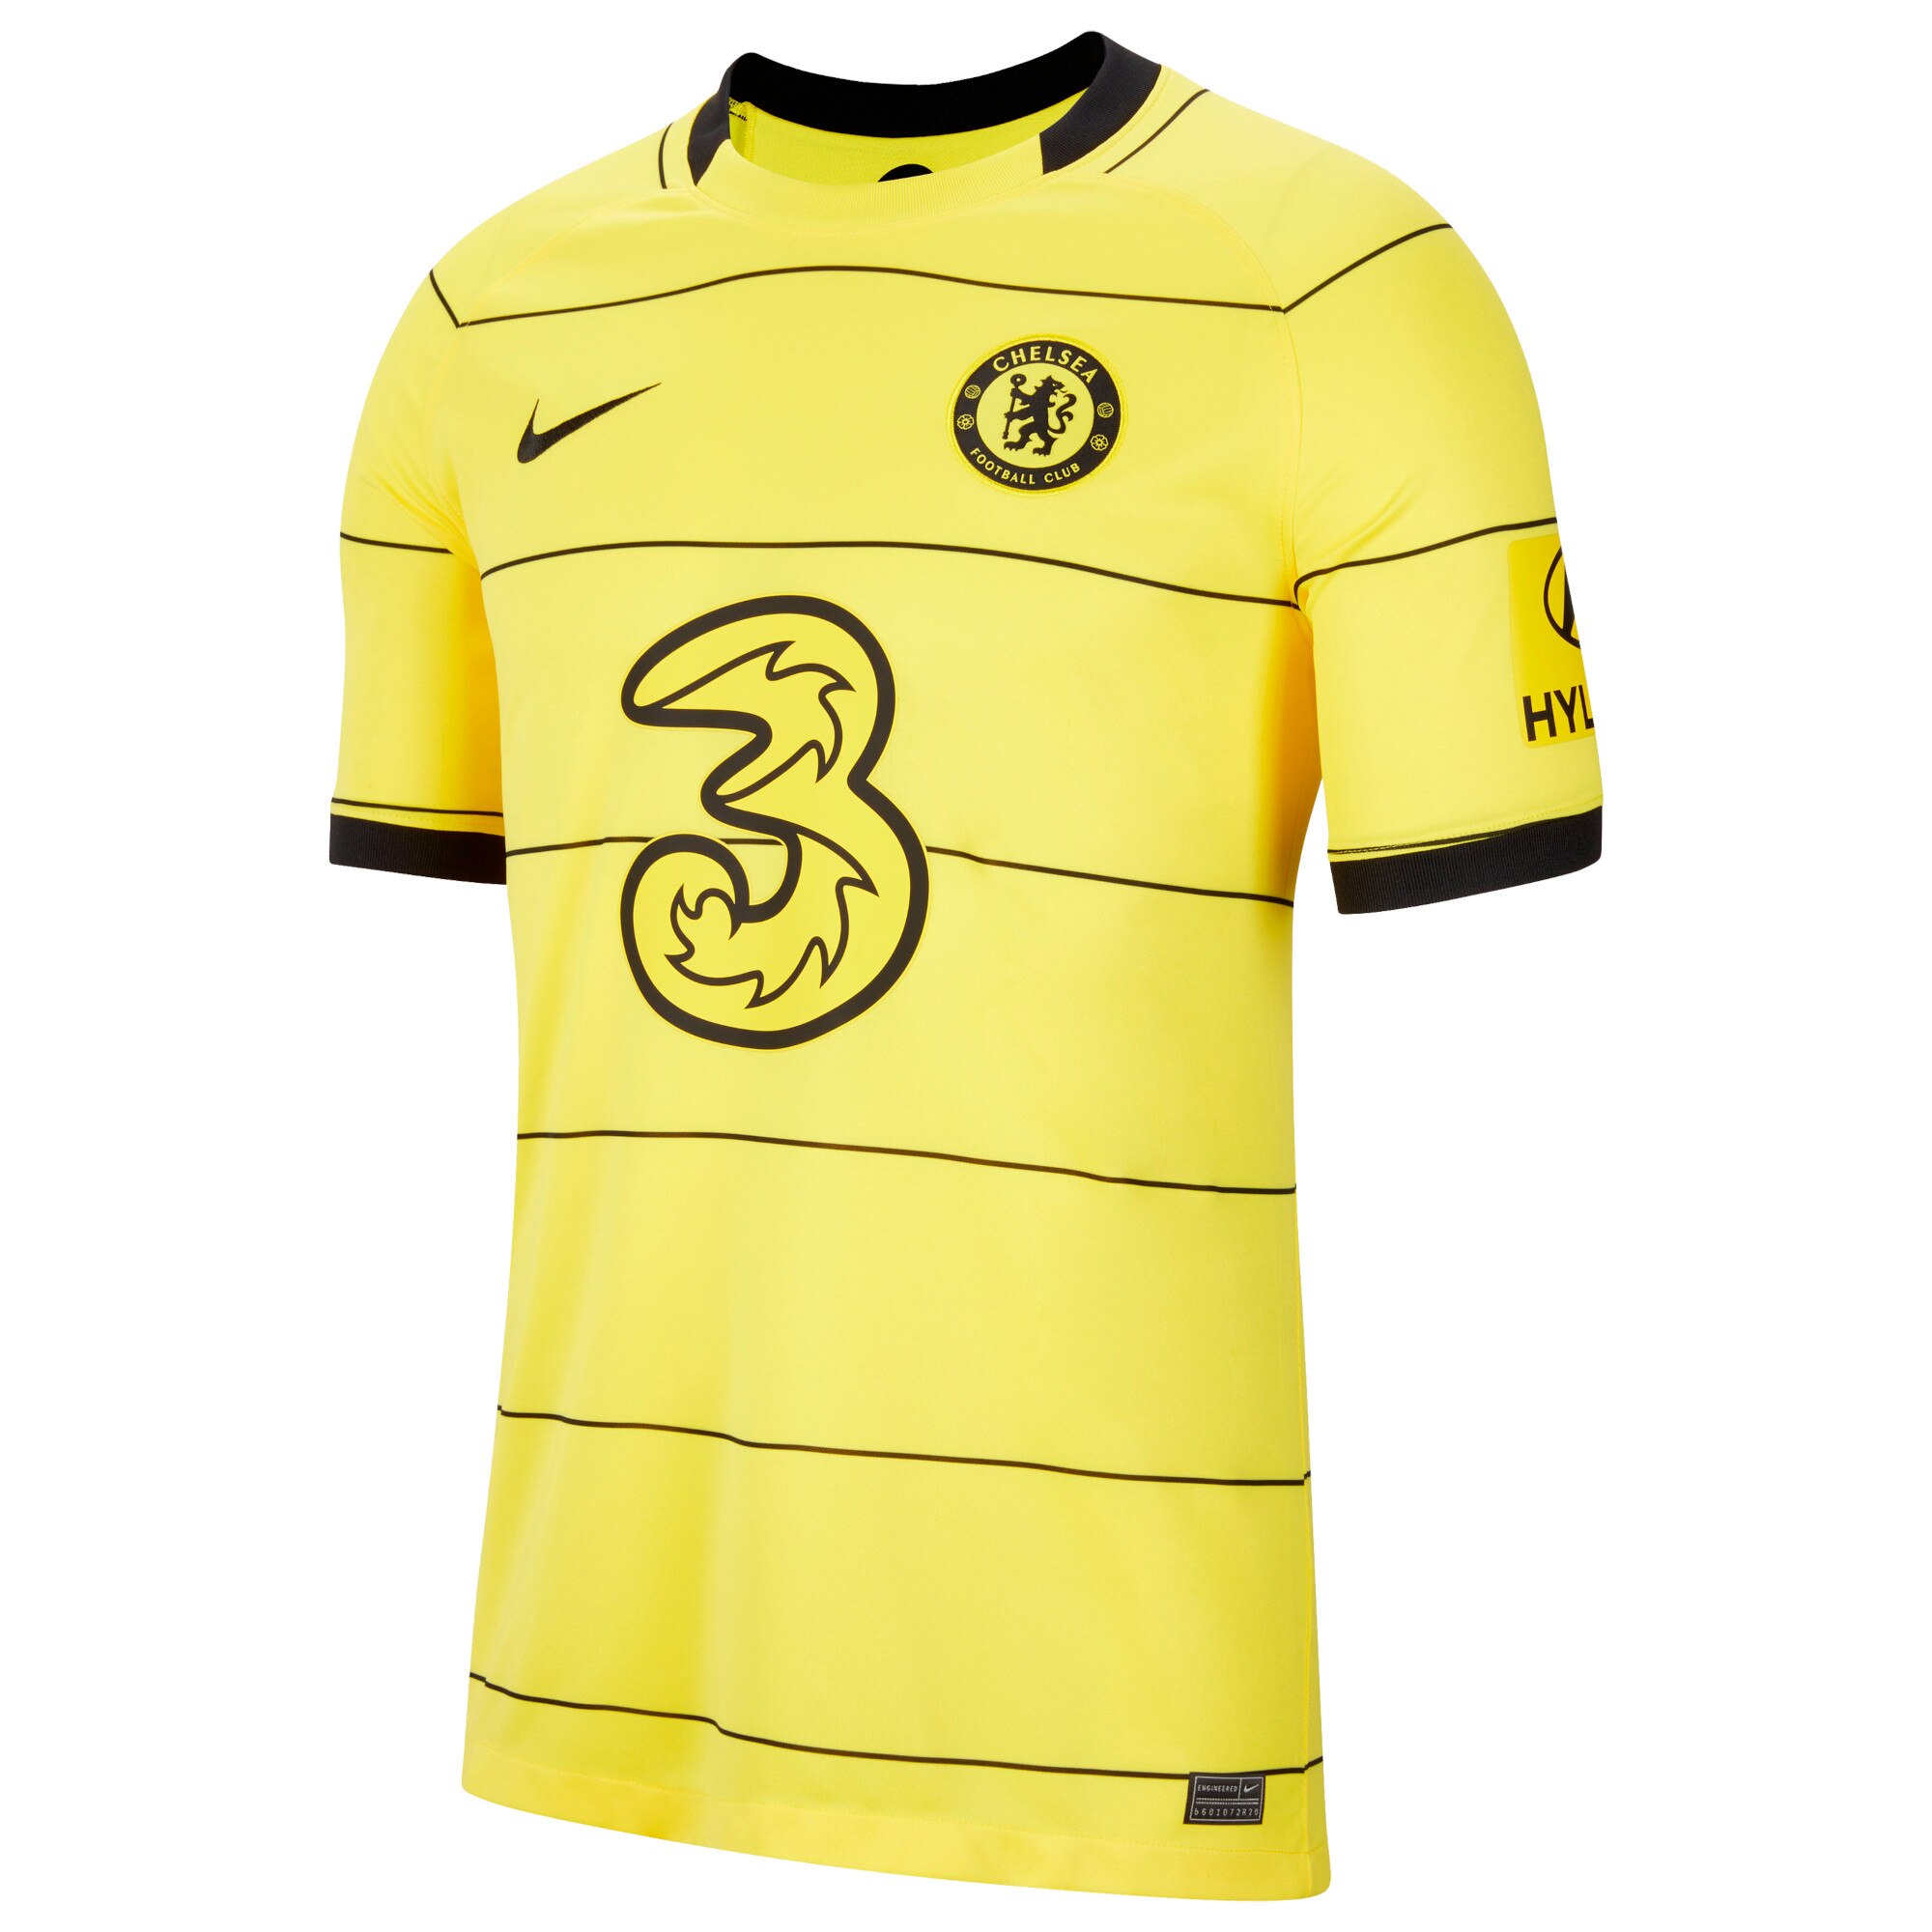 Chelsea Away Stadium Shirt 2021-22 with T. Silva 6 printing